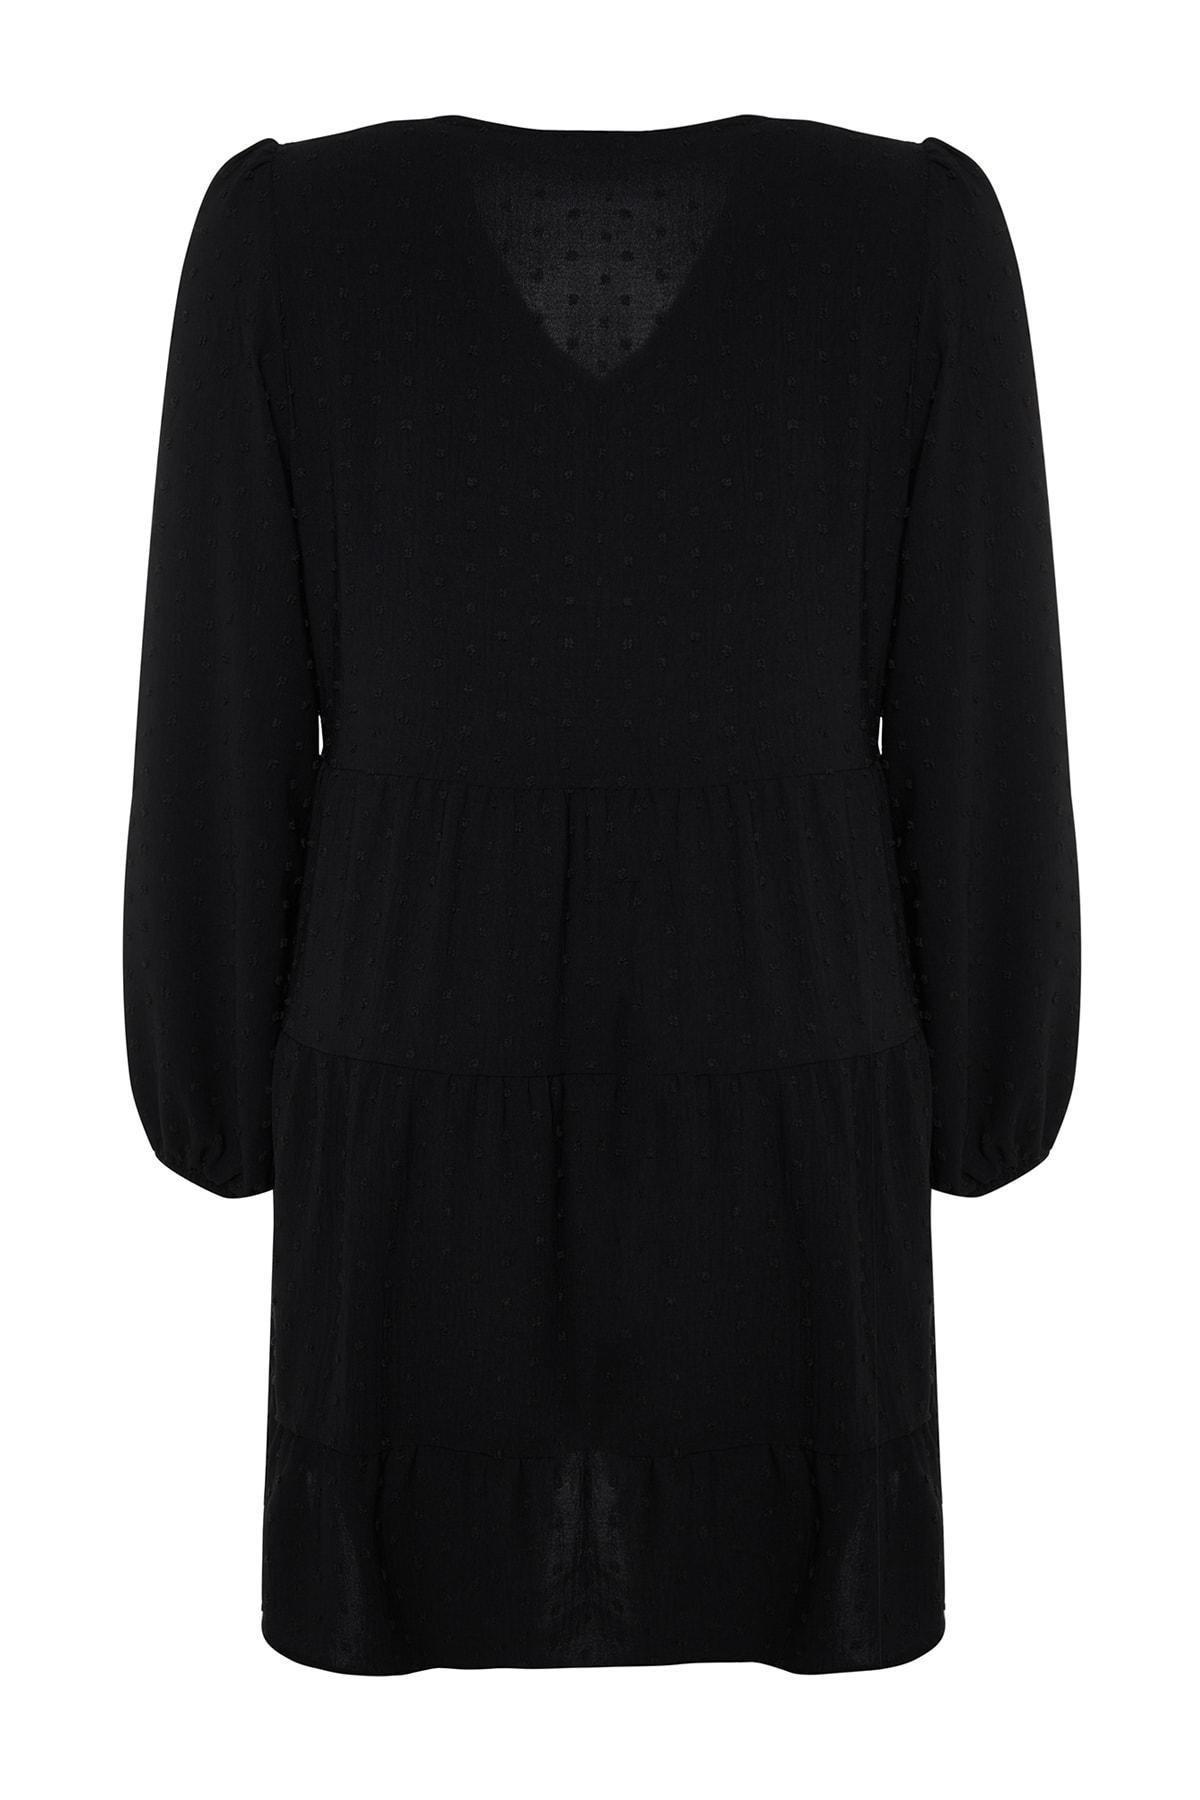 Trendyol - Black Shift Plus Size Dress